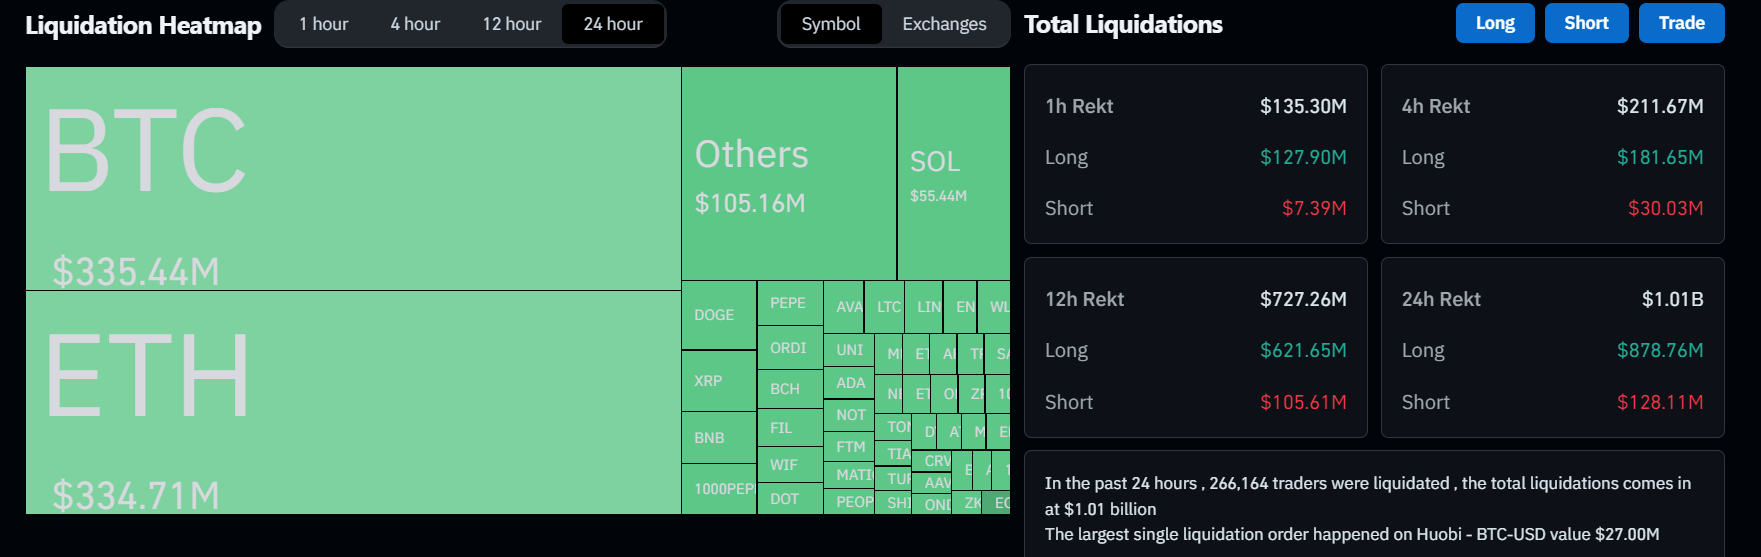 Liquidation Heatmap chart